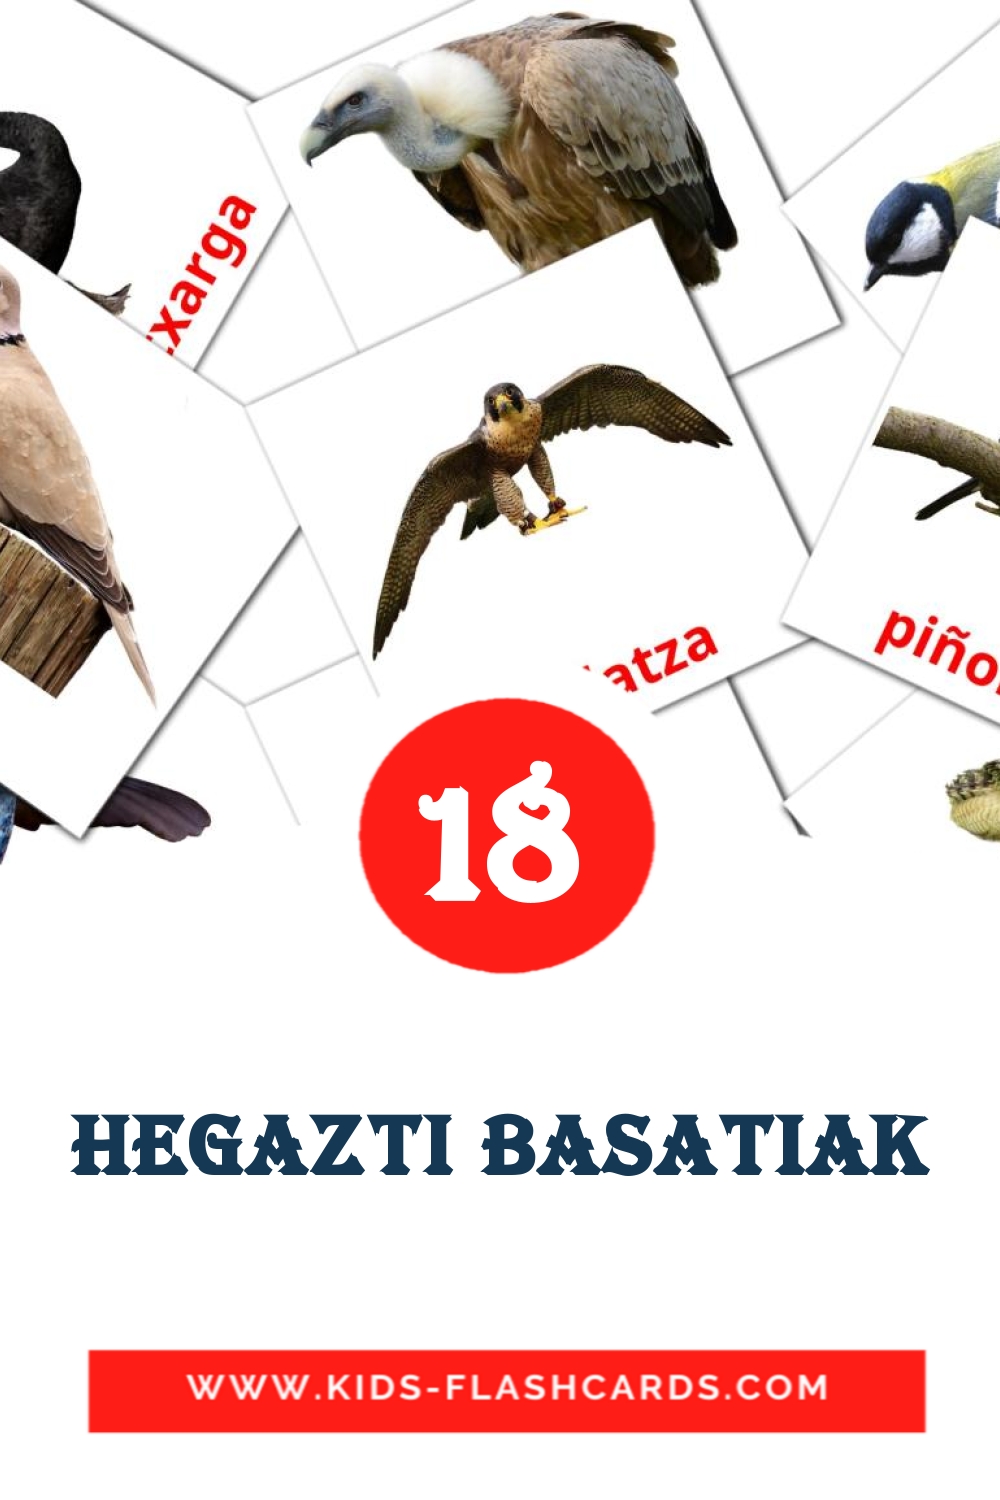 18 Hegazti basatiak Picture Cards for Kindergarden in basque